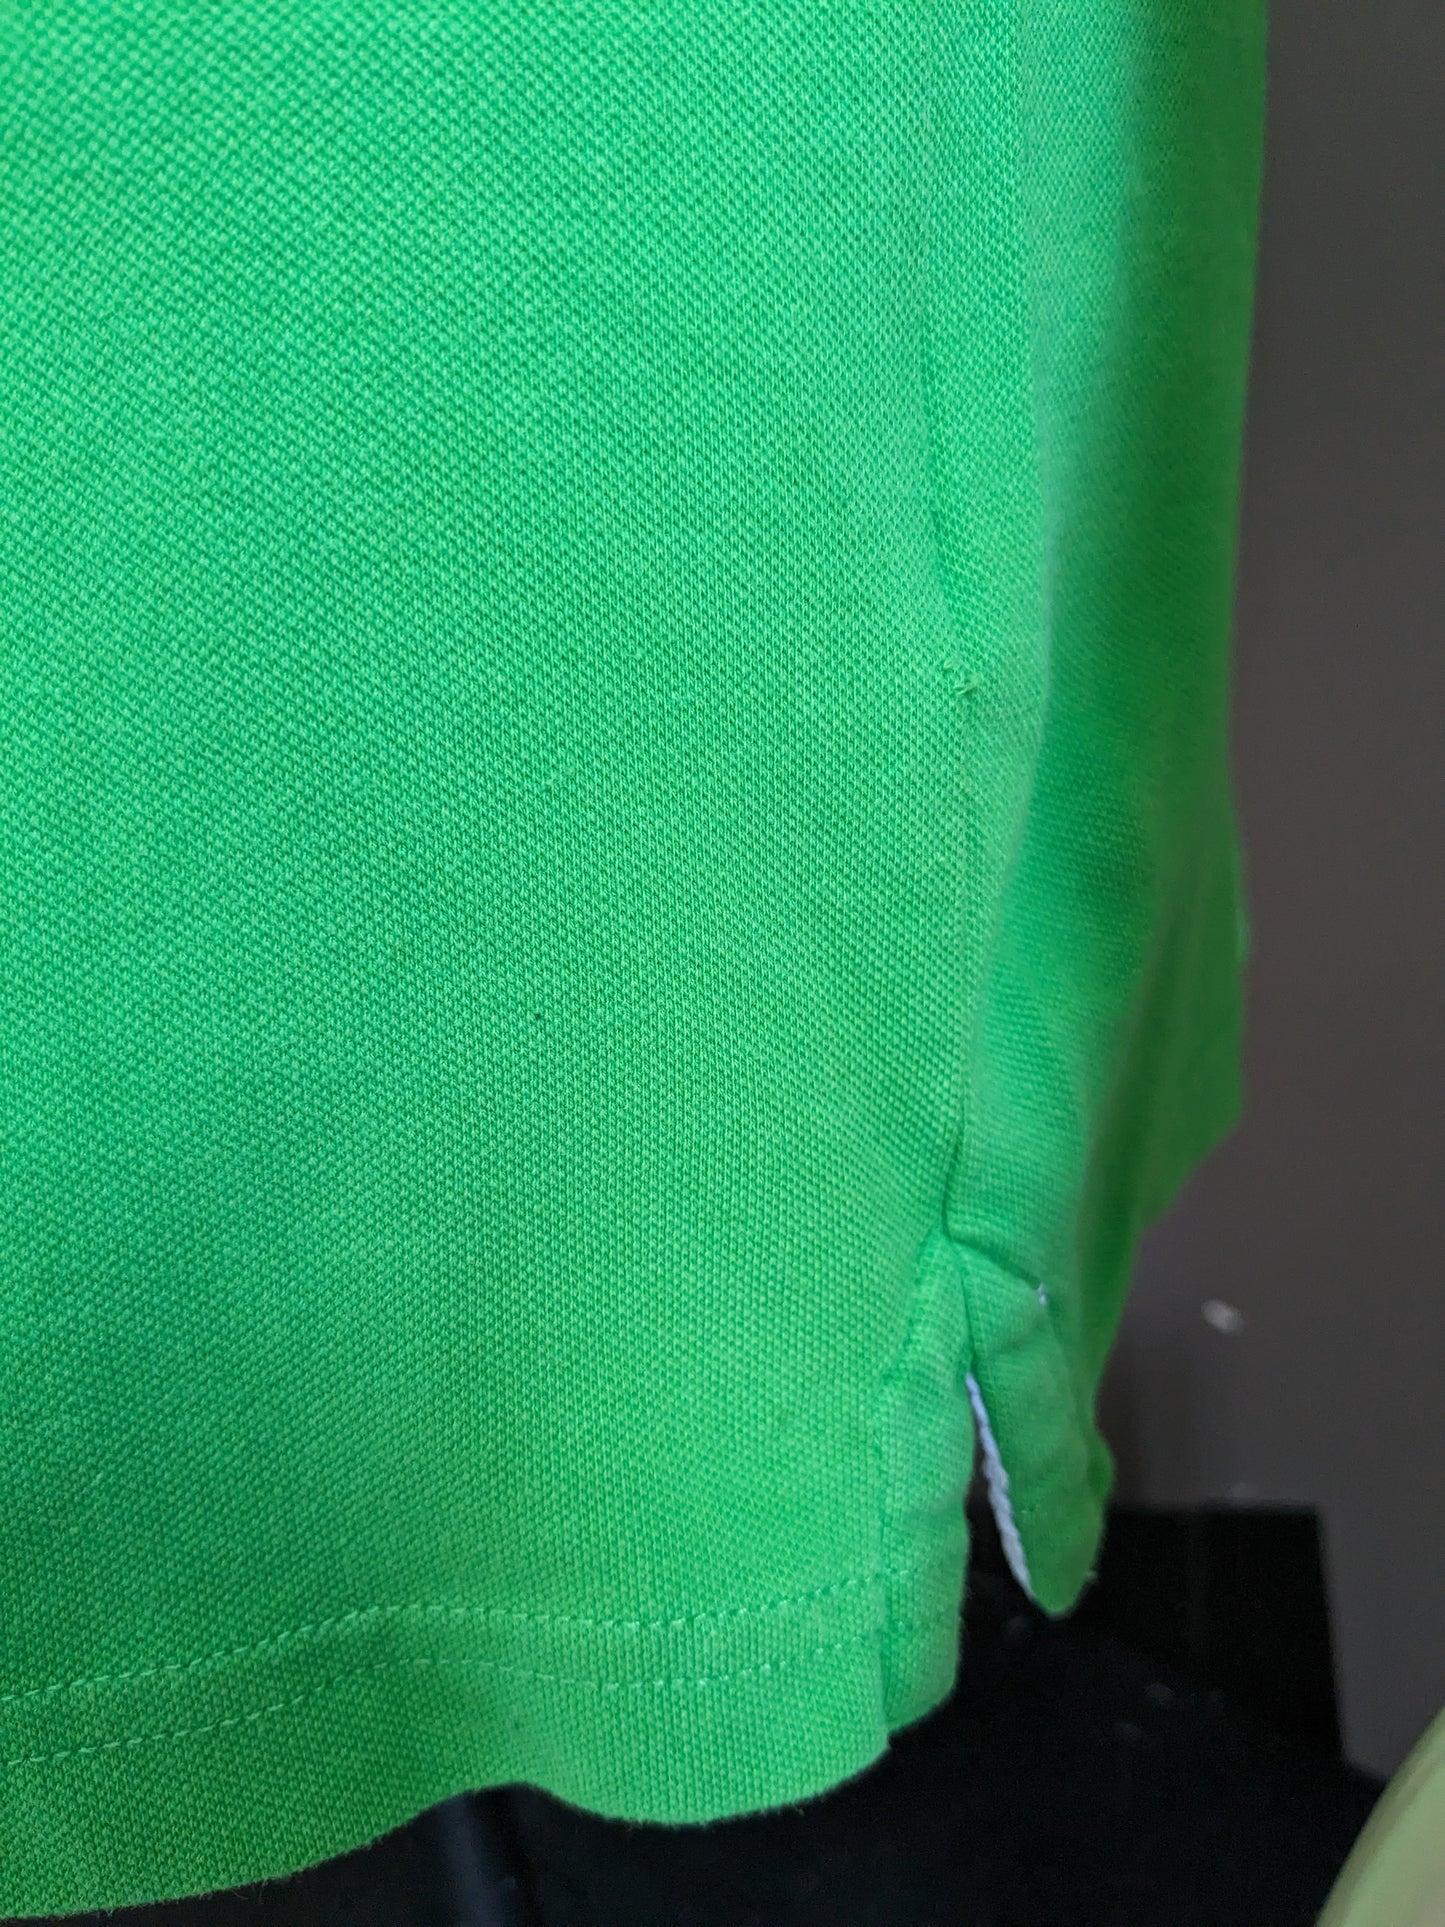 Vintage Kangol polo. Groen gekleurd, met gekleurd gestreepte accenten. Maat L.